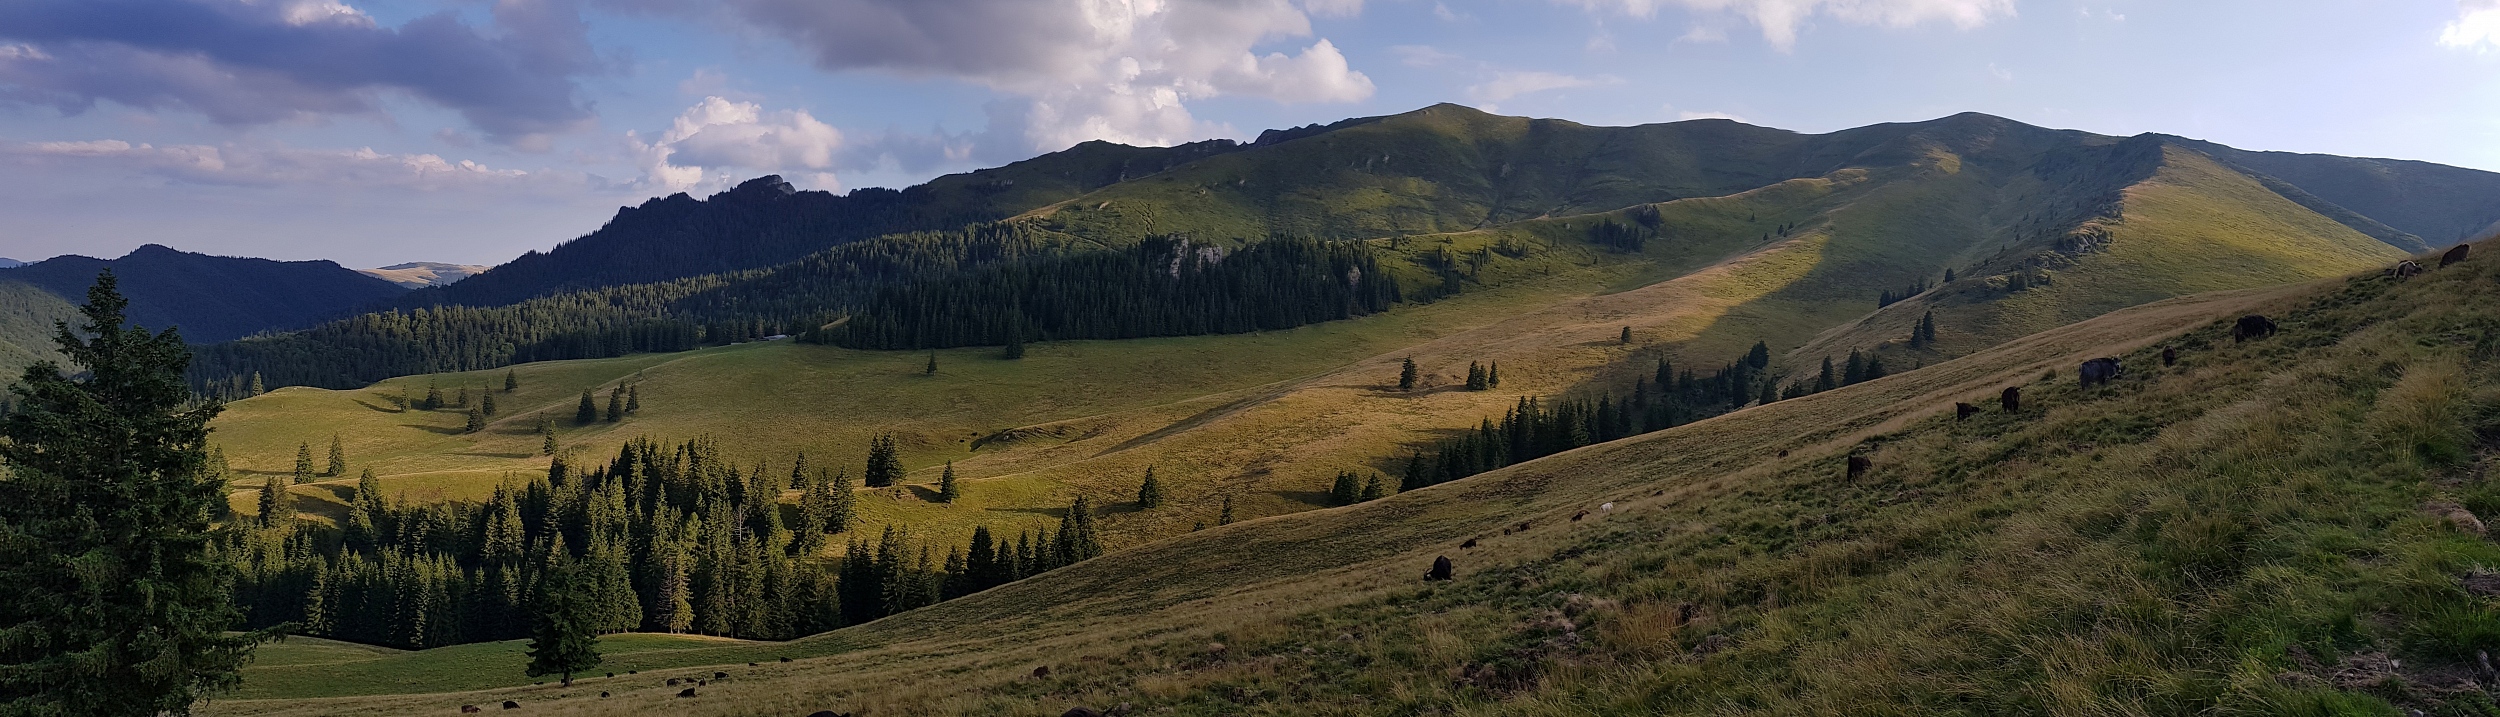 Munții Ciucaș / Východní Ciucaș. www.transcarpathian.org